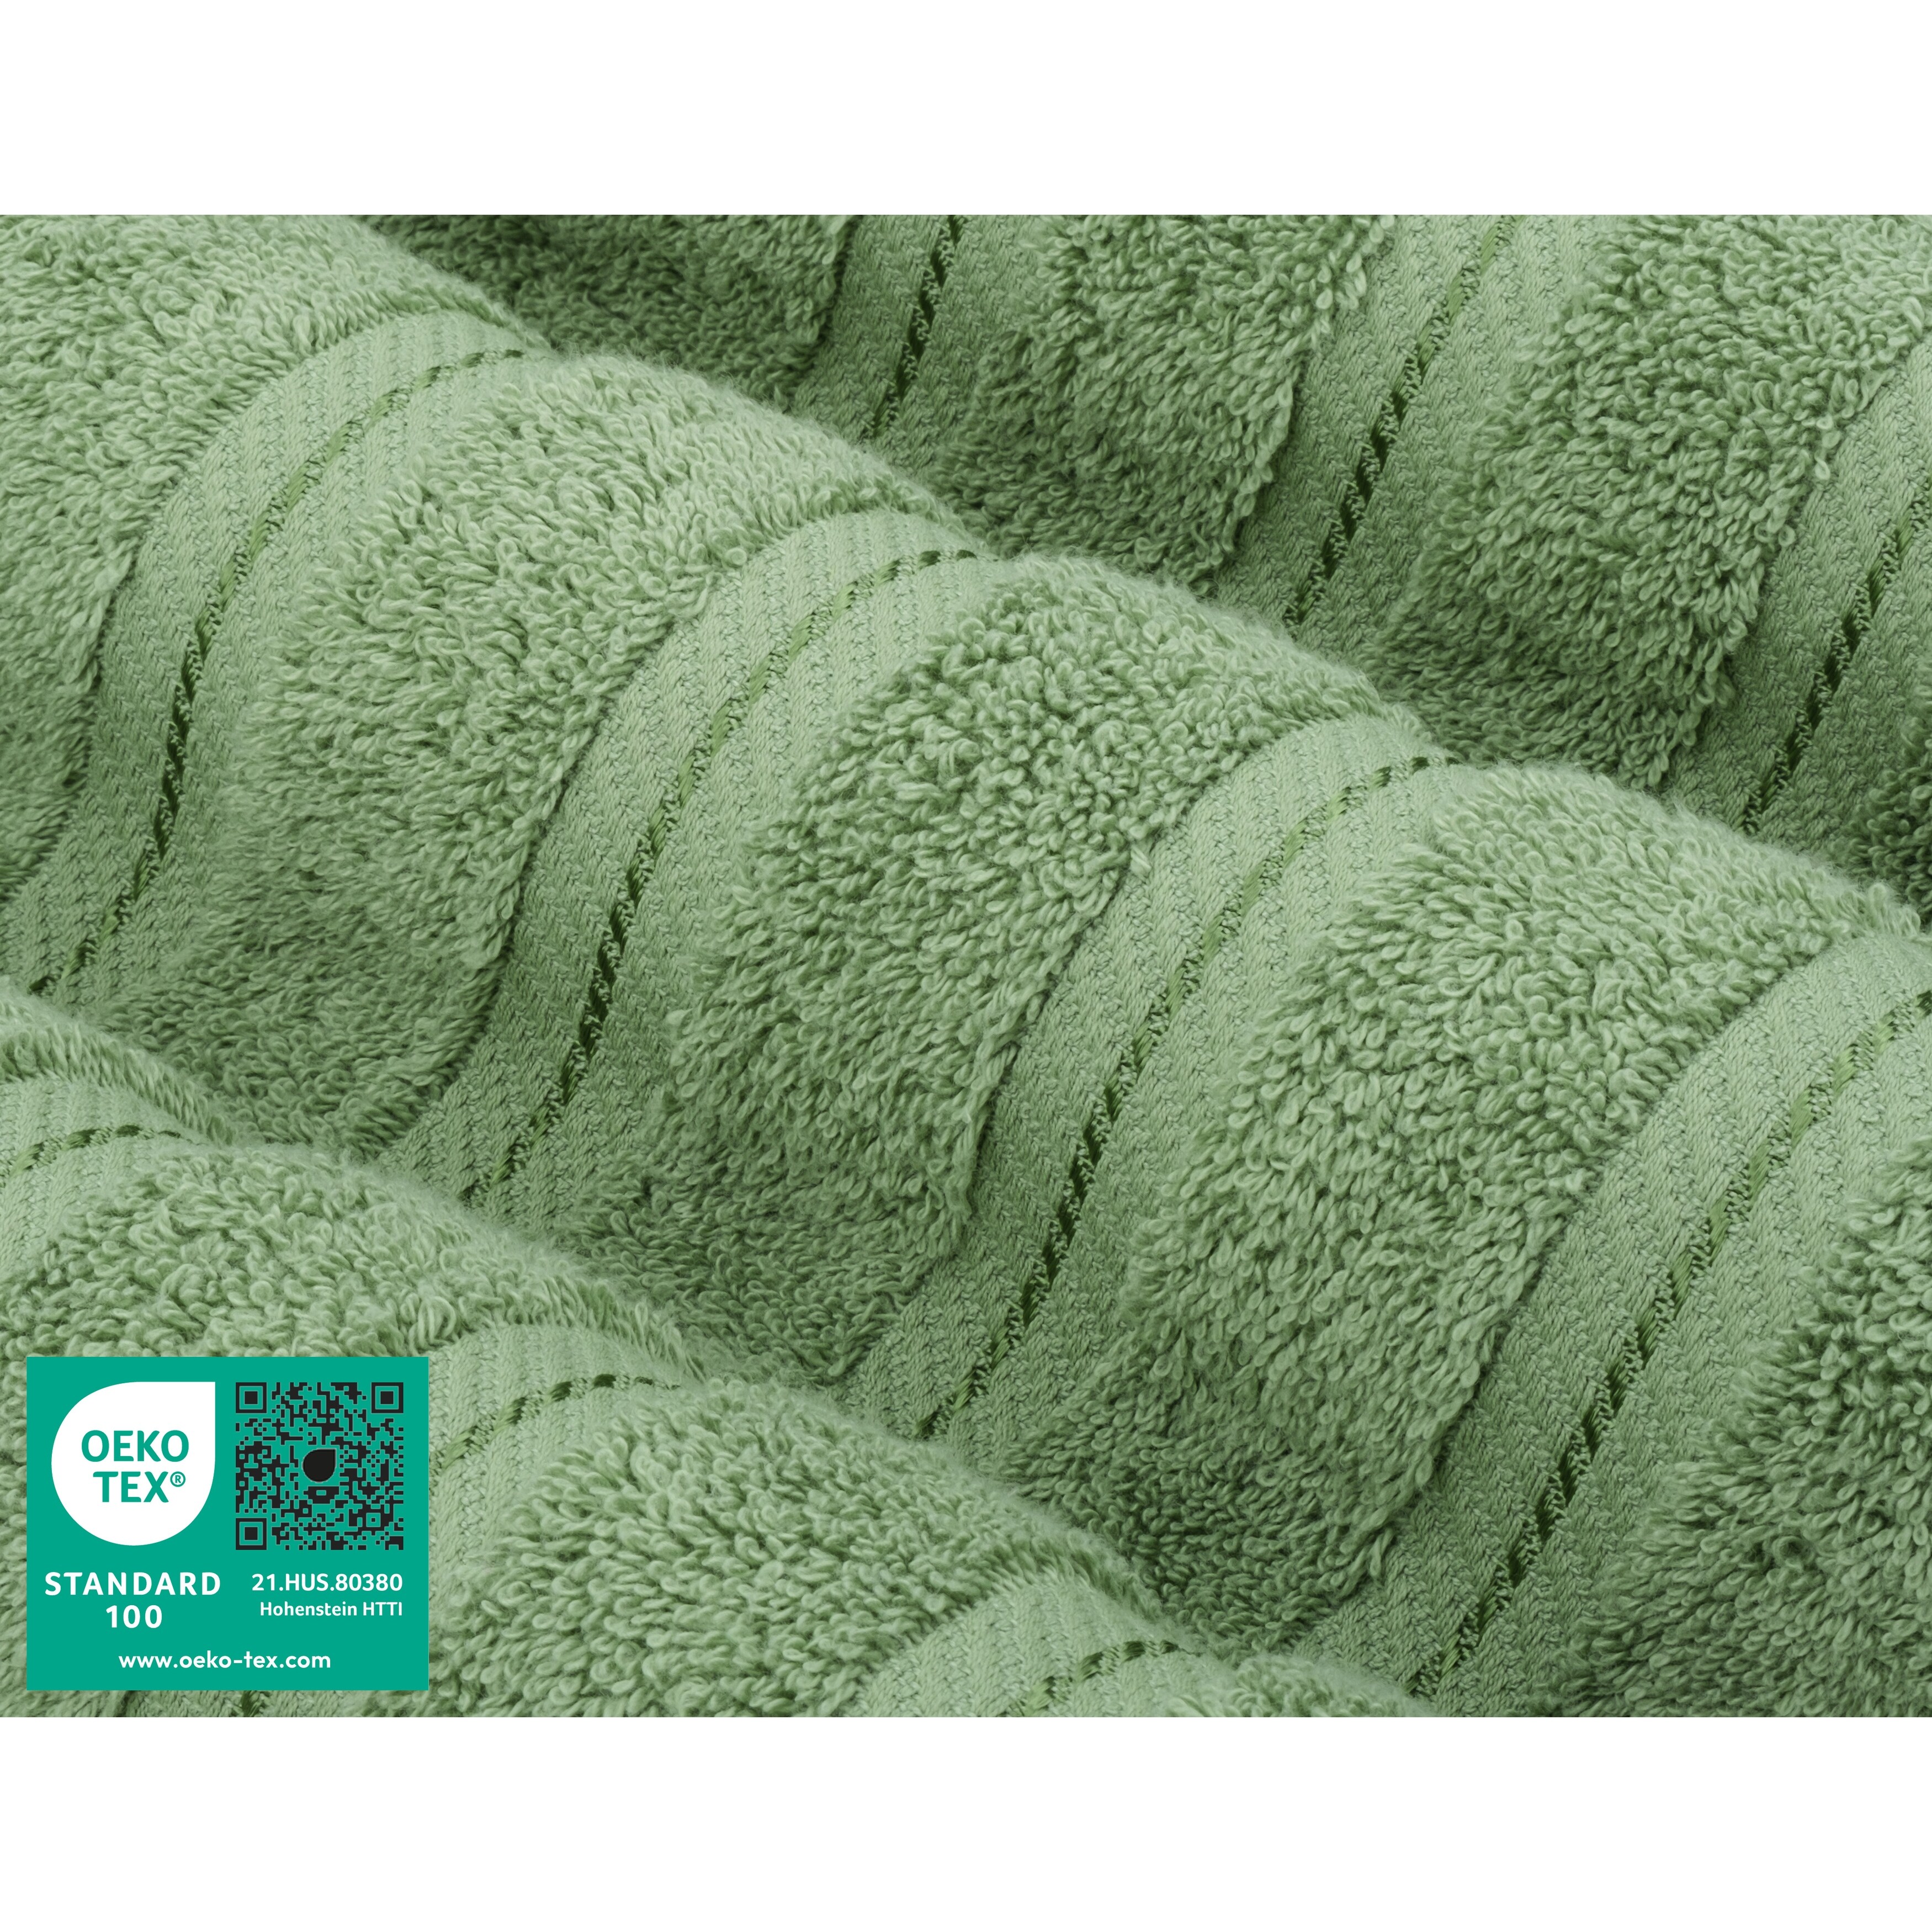 Zimmer 4 Piece Turkish Cotton Bath Towel Set (Set of 4) Highland Dunes Color: Green